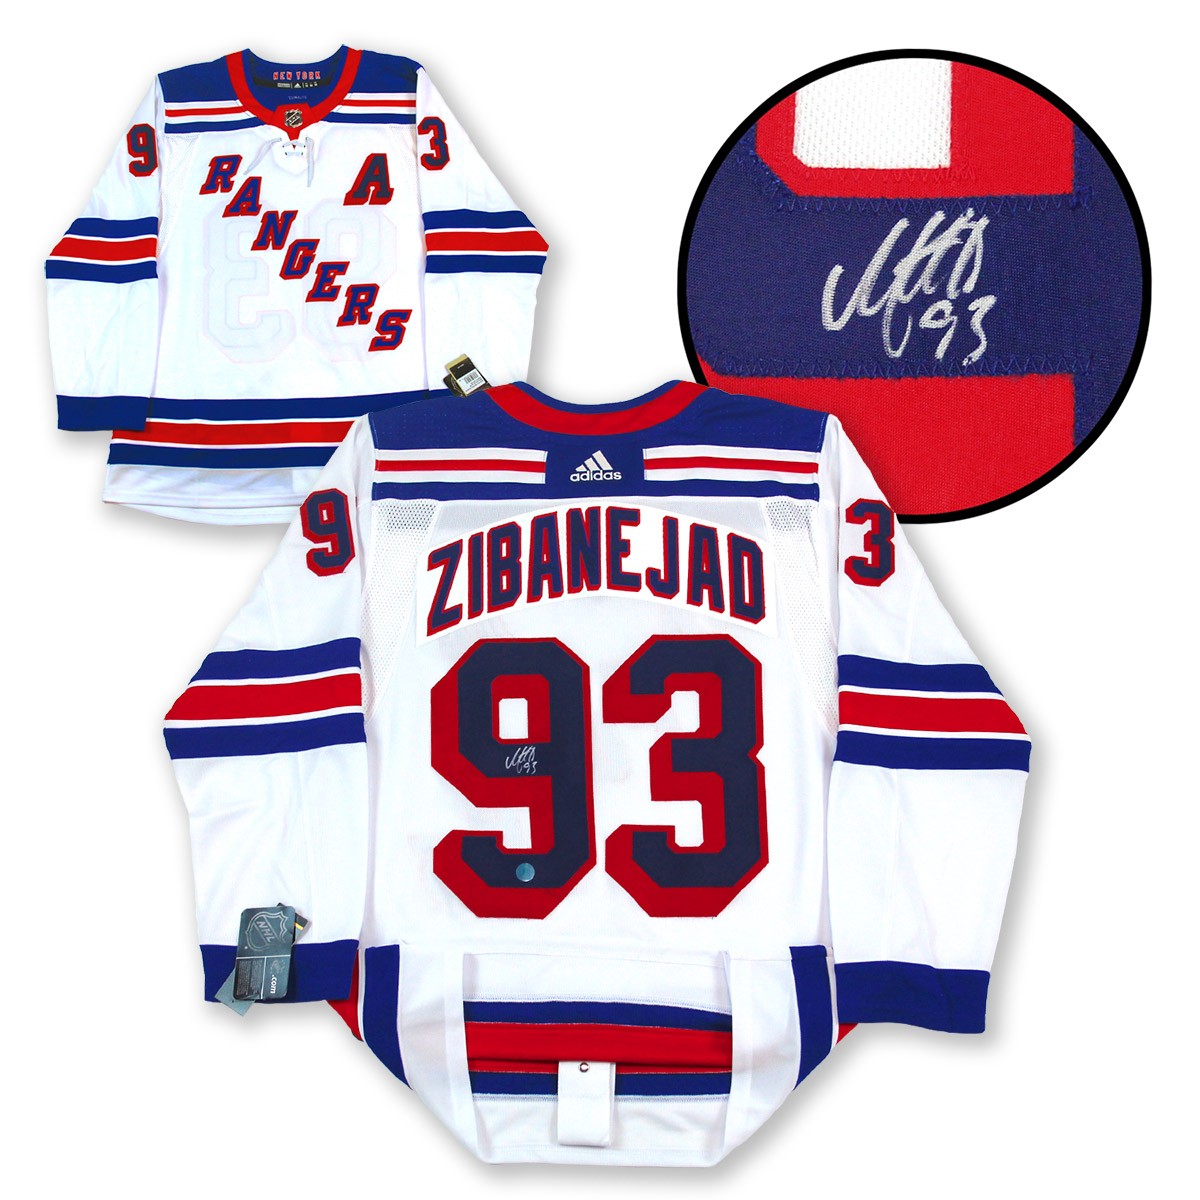 New York Rangers NHL Original Autographed Jerseys for sale